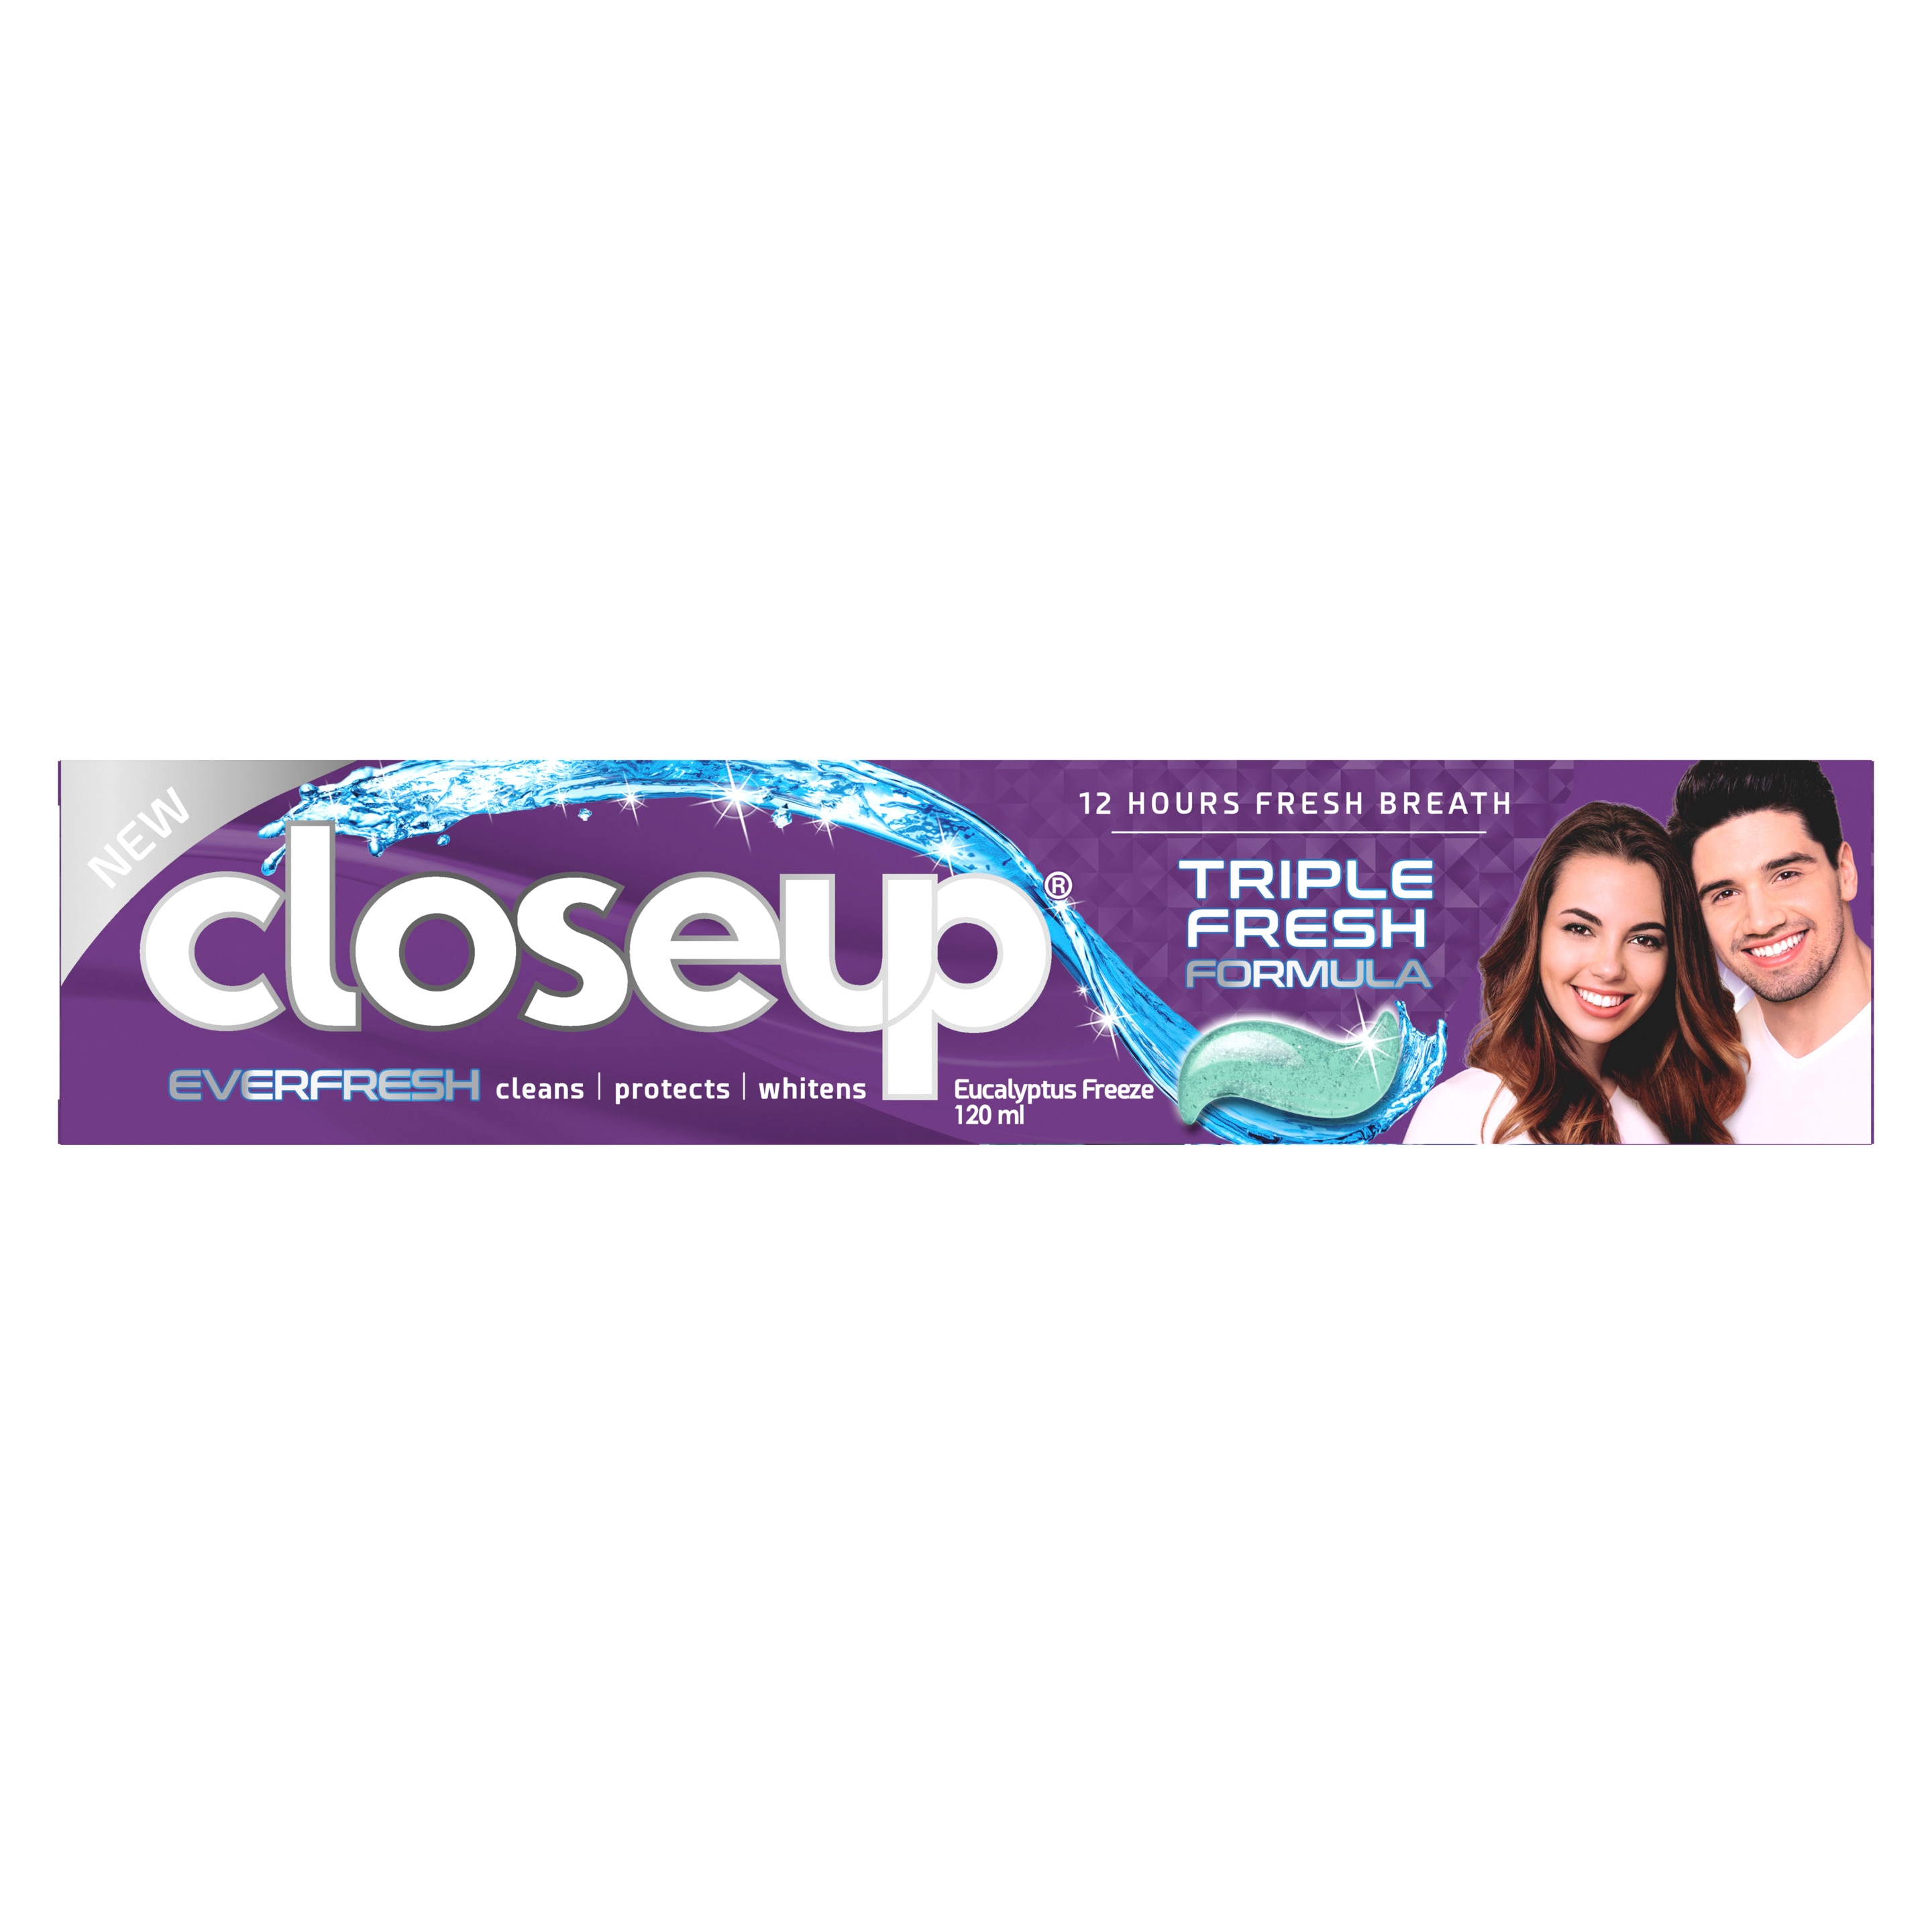 Closeup® Eucalyptus Freeze Gel Toothpaste Keeps you Protected & Fresh